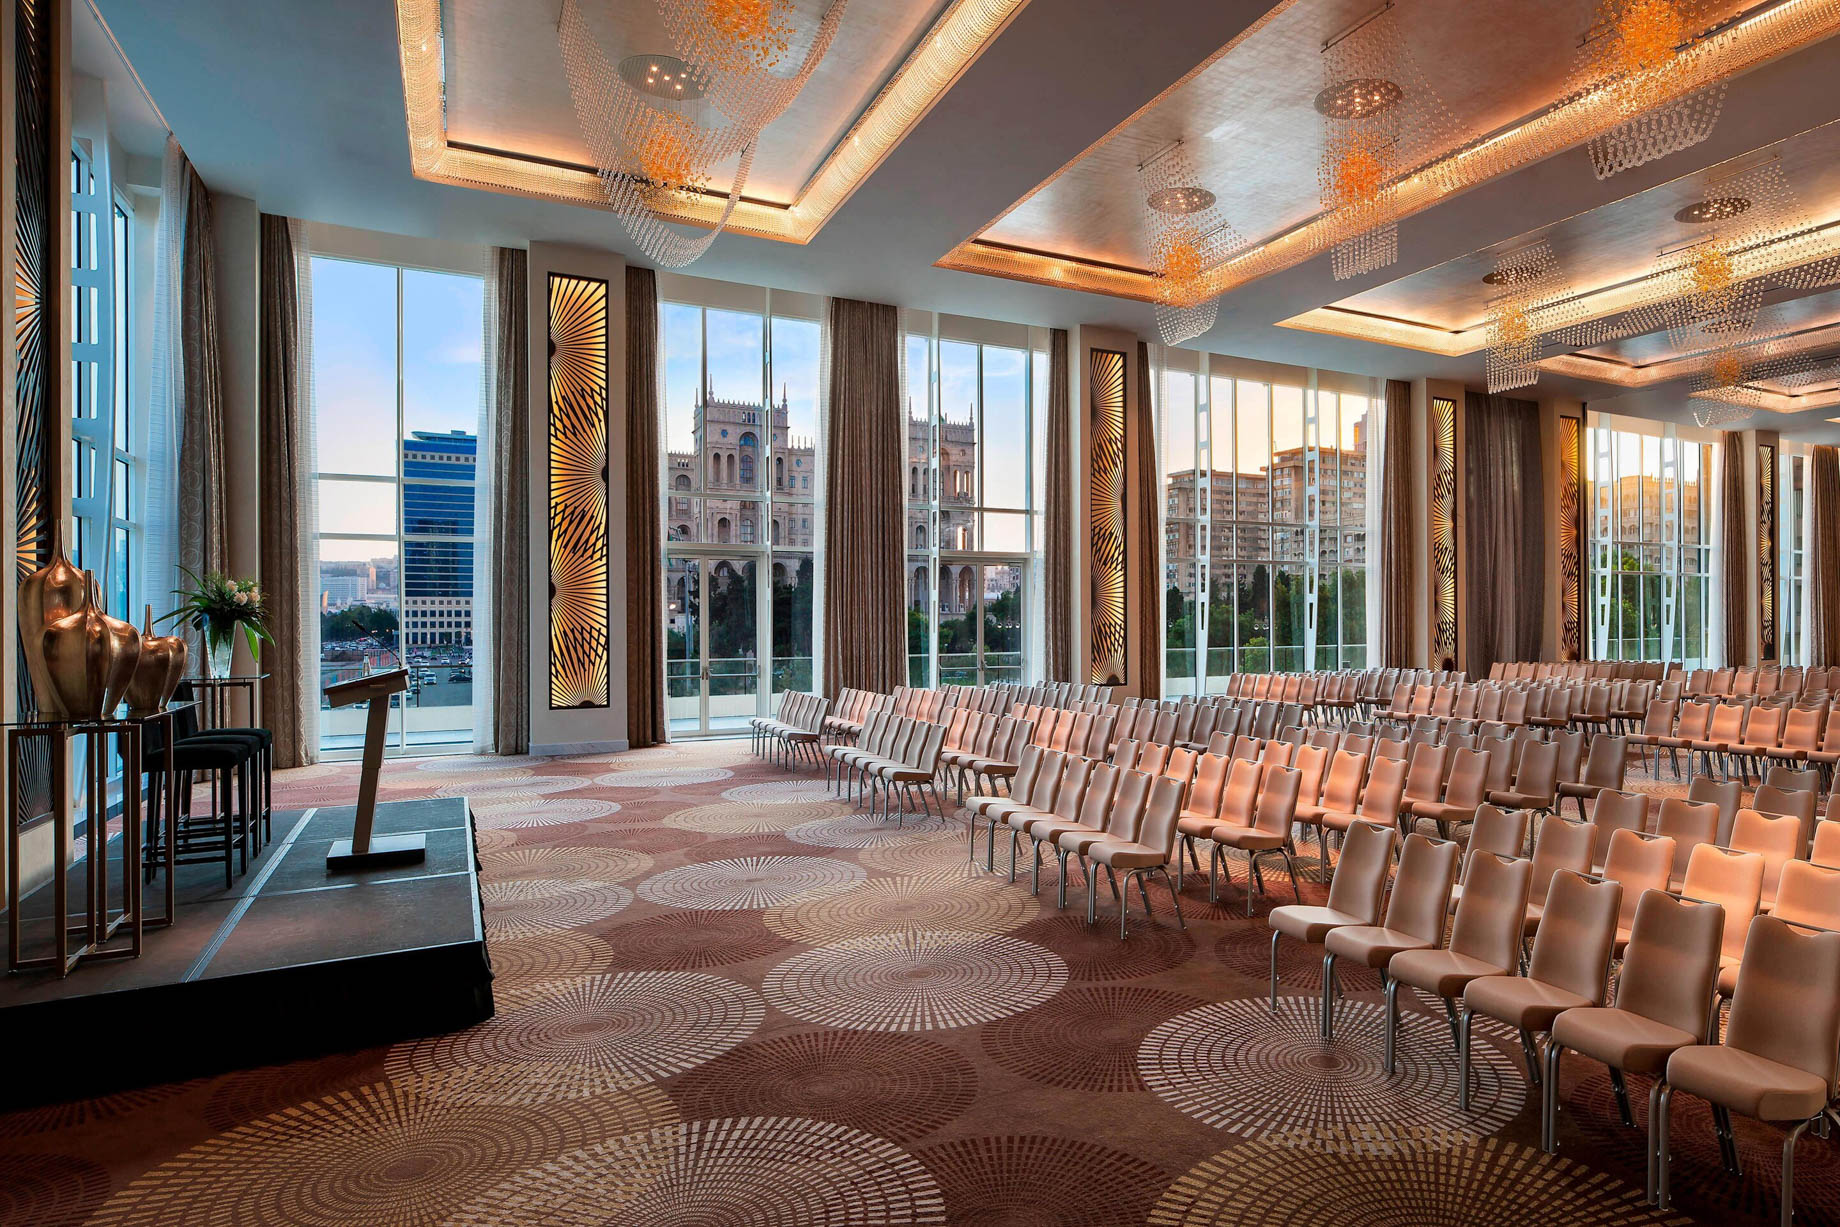 JW Marriott Absheron Baku Hotel – Baku, Azerbaijan – Sharg Zali Ballroom Theatre Setup